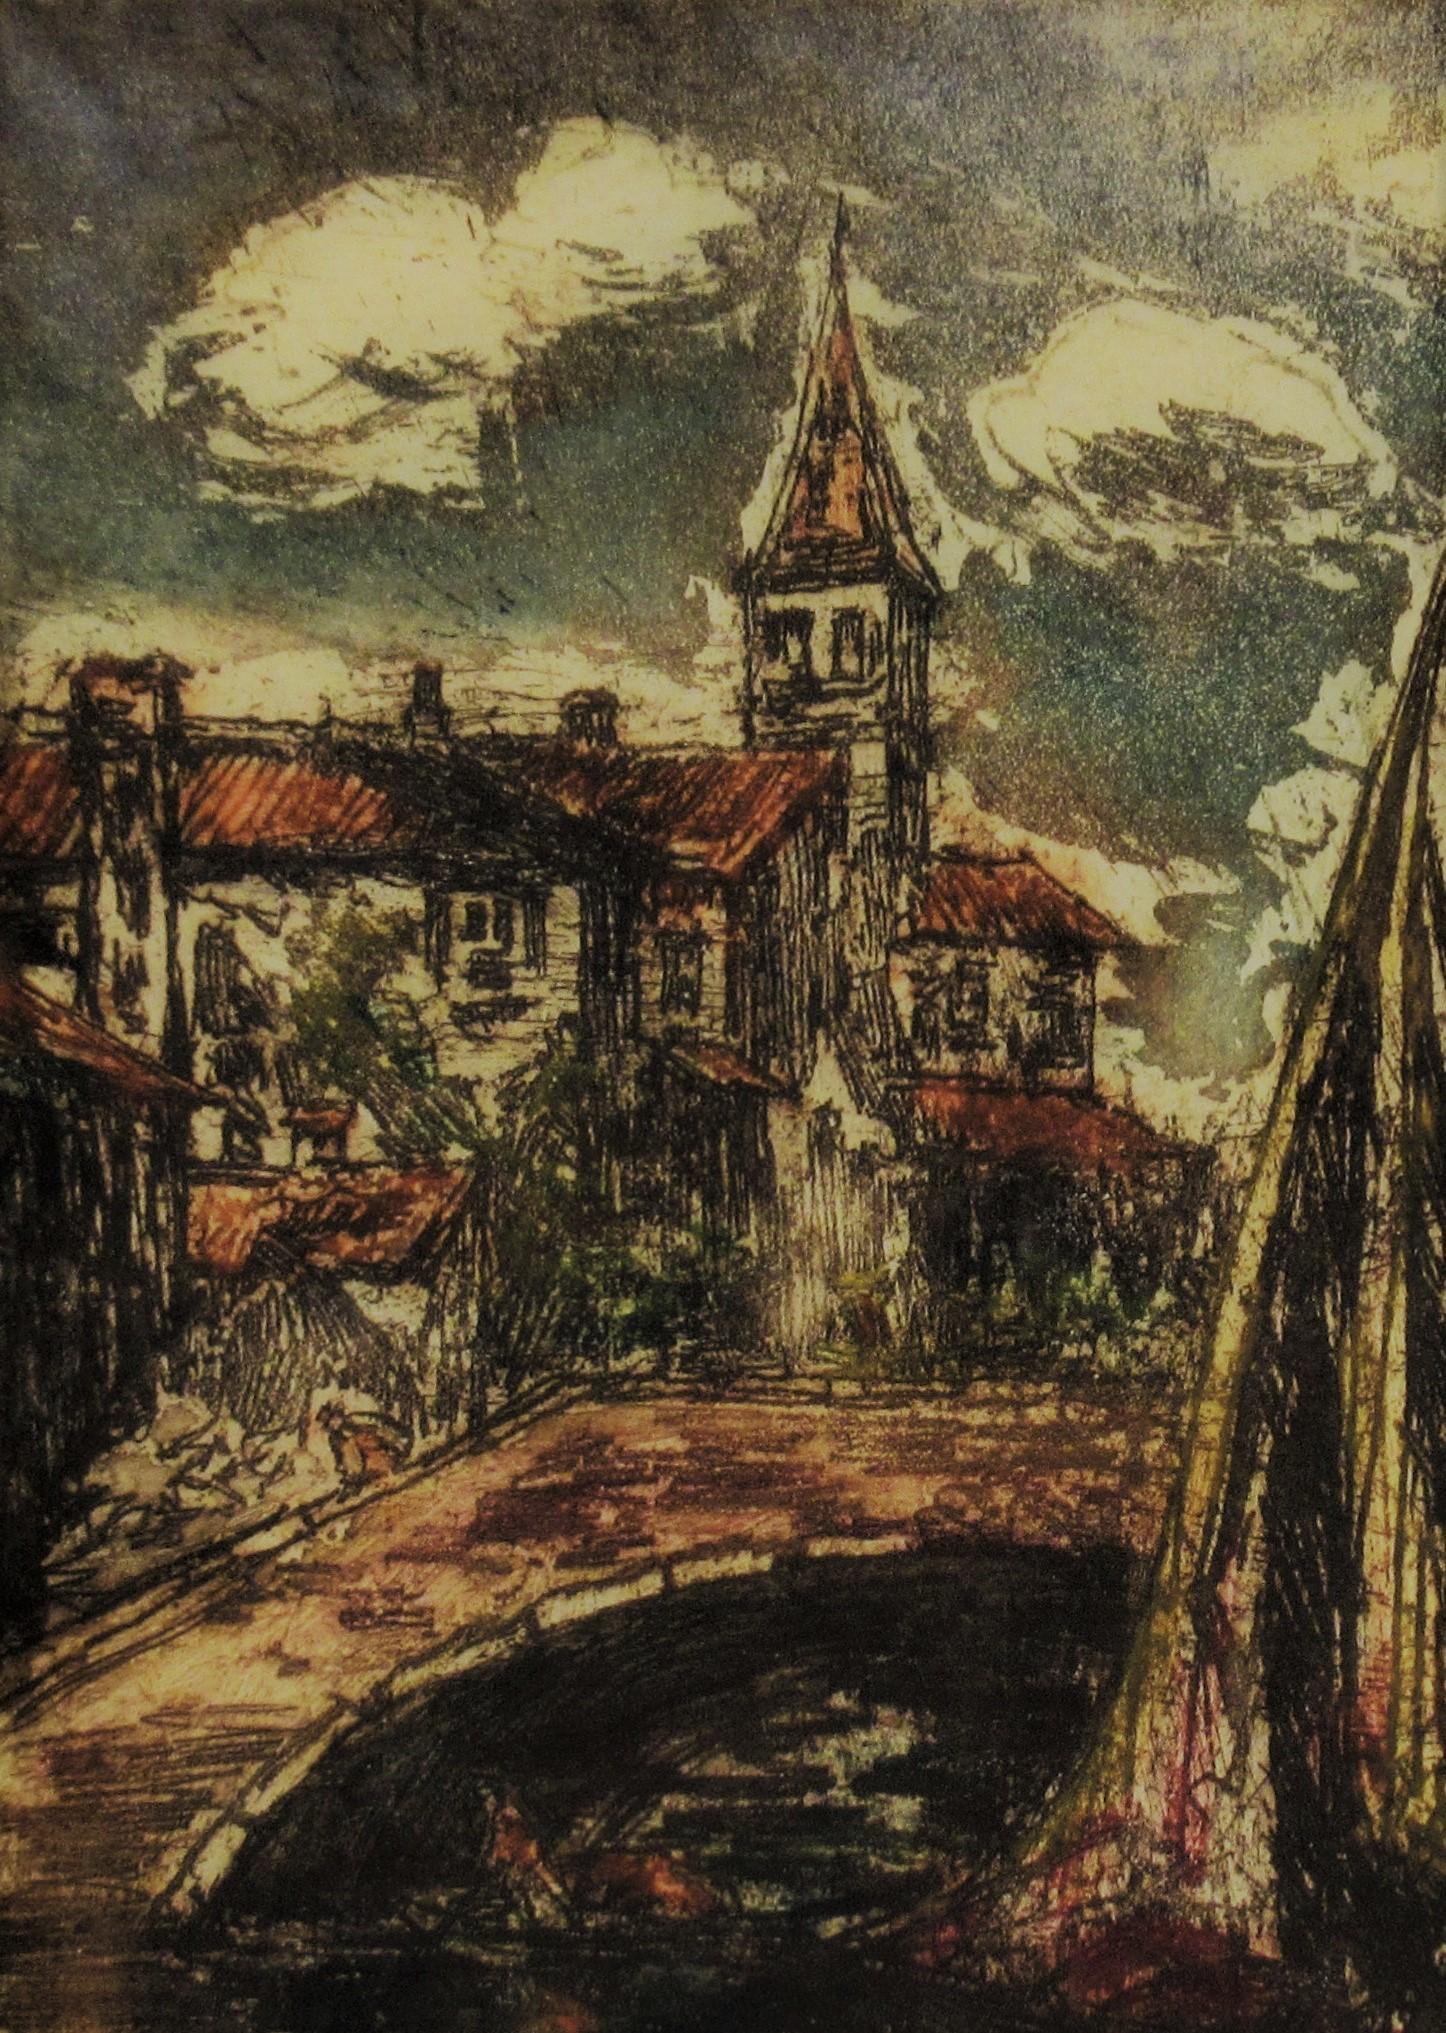 Village en France - Impressionnisme américain Print par David Rosenthal